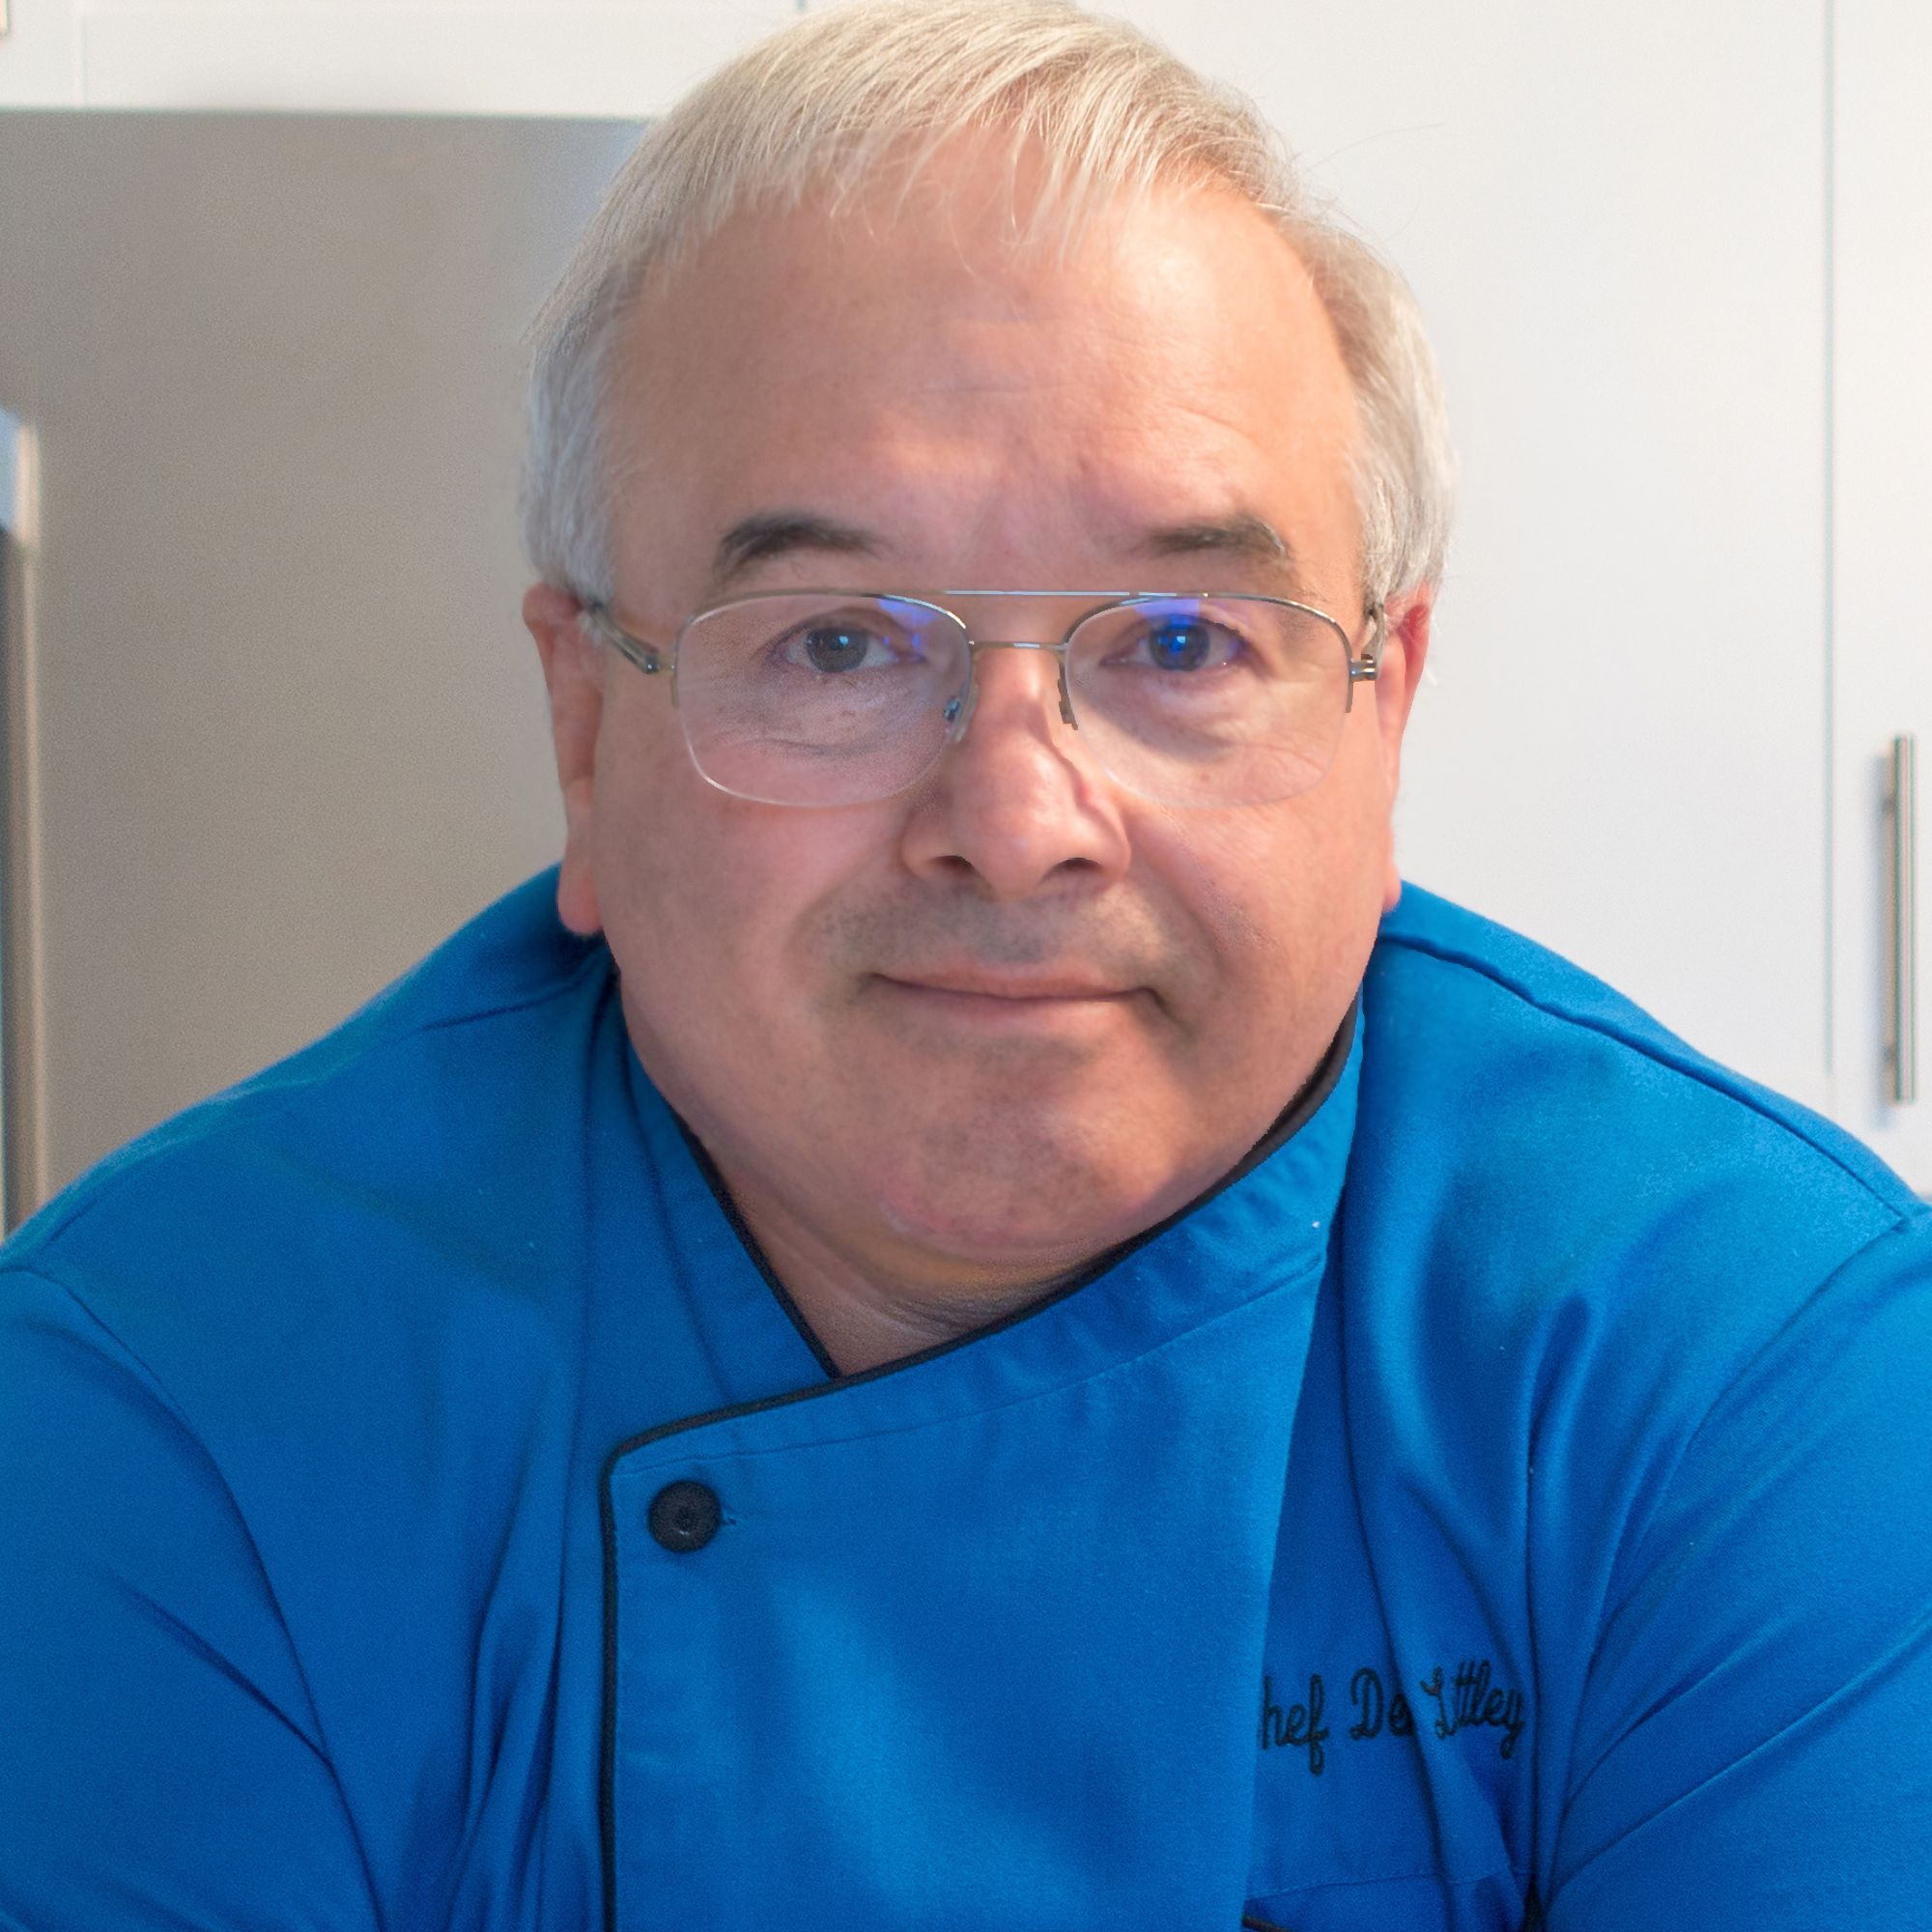 A headshot of chef Dennis Littley